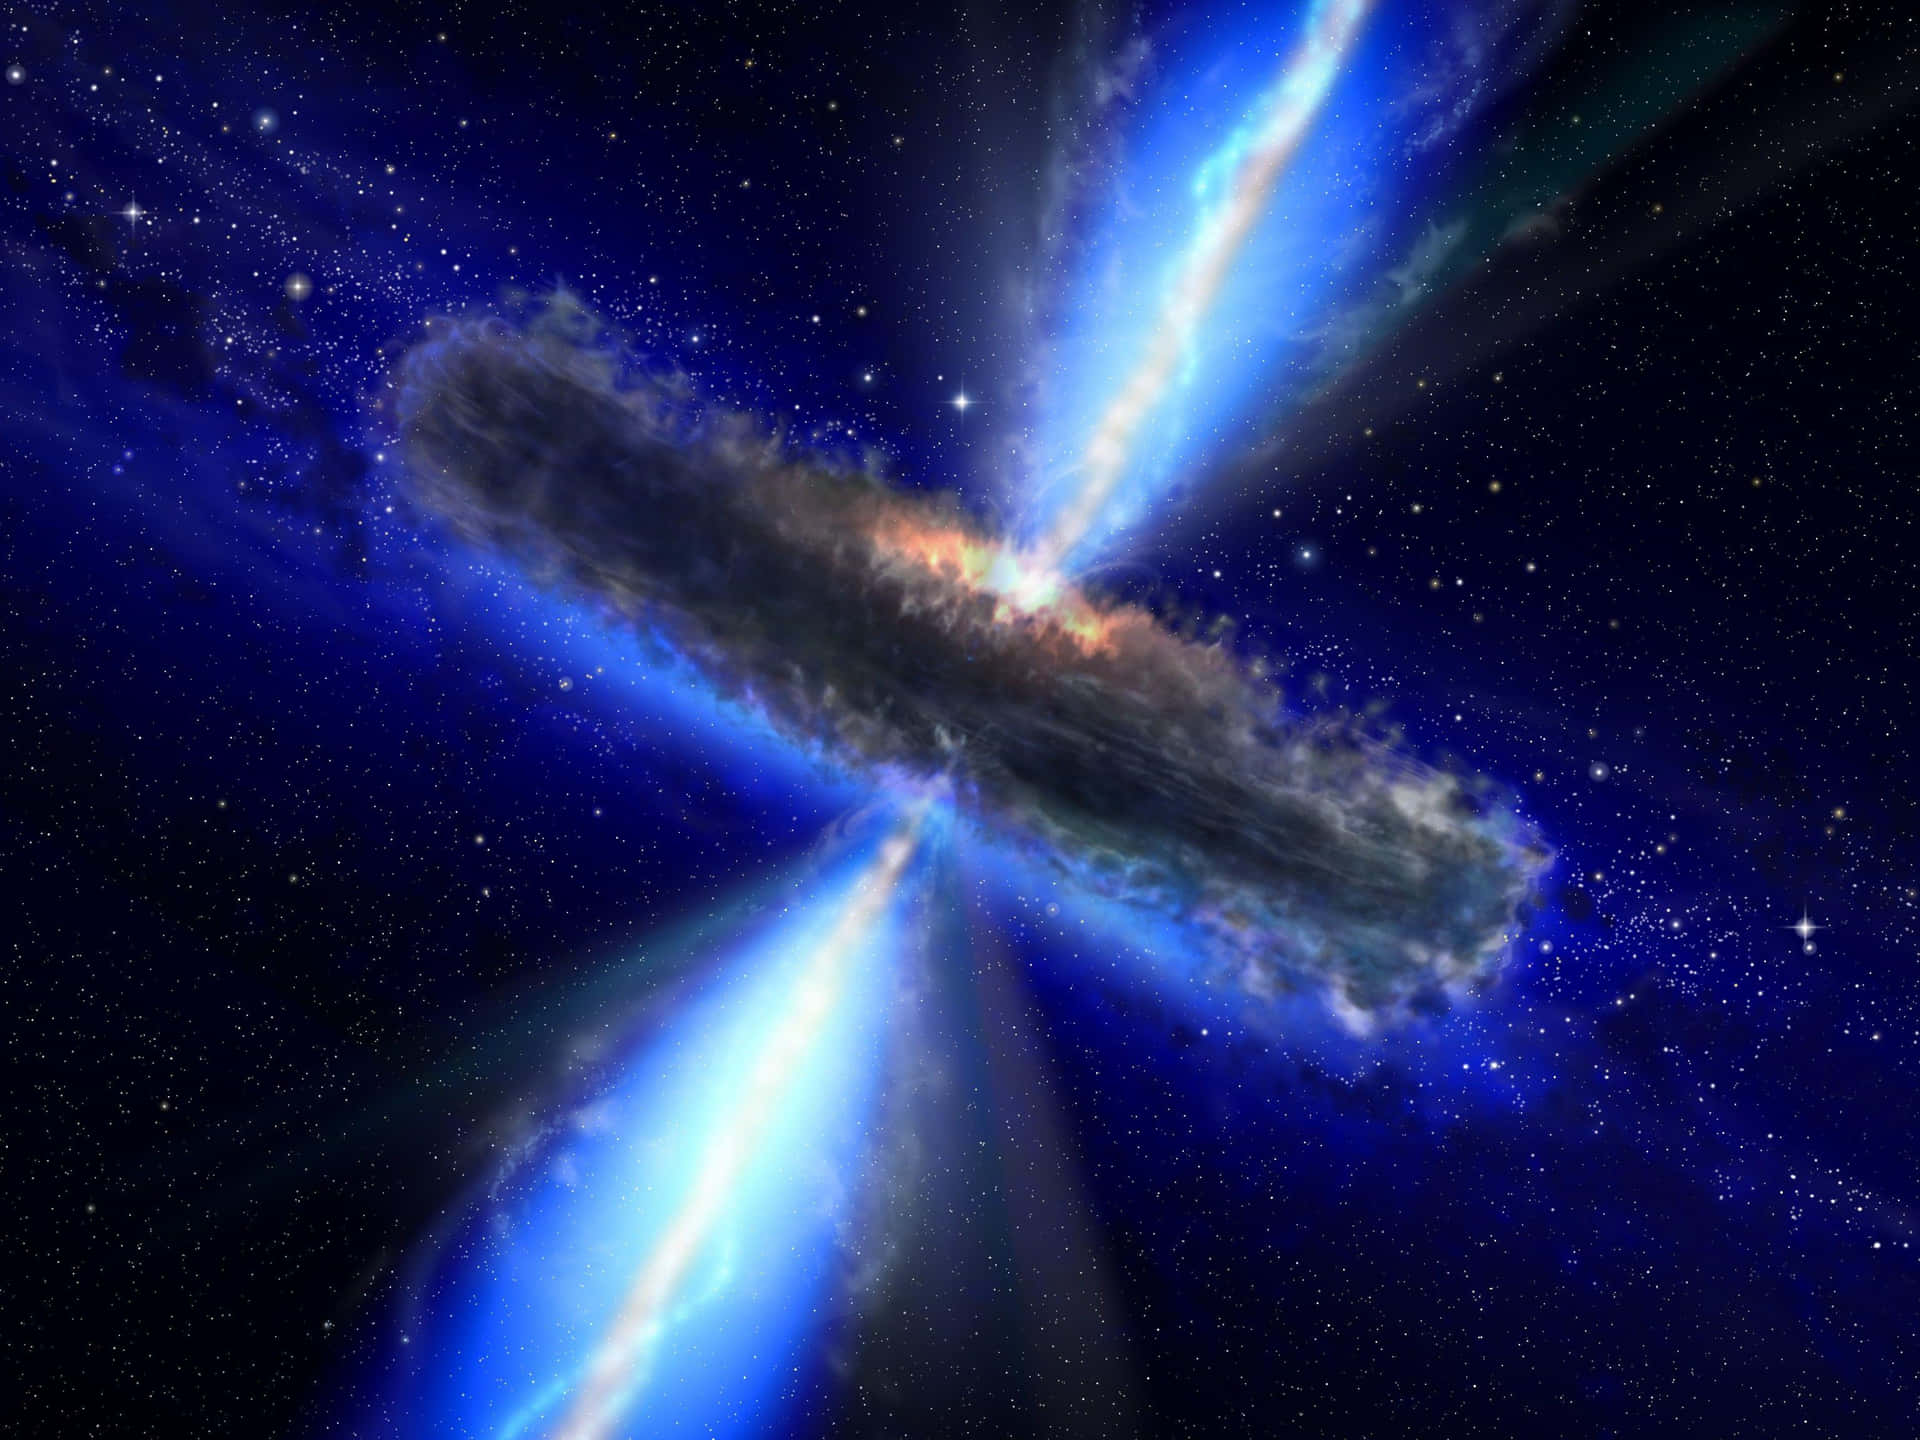 Caption: Stunning Quasar Image Background